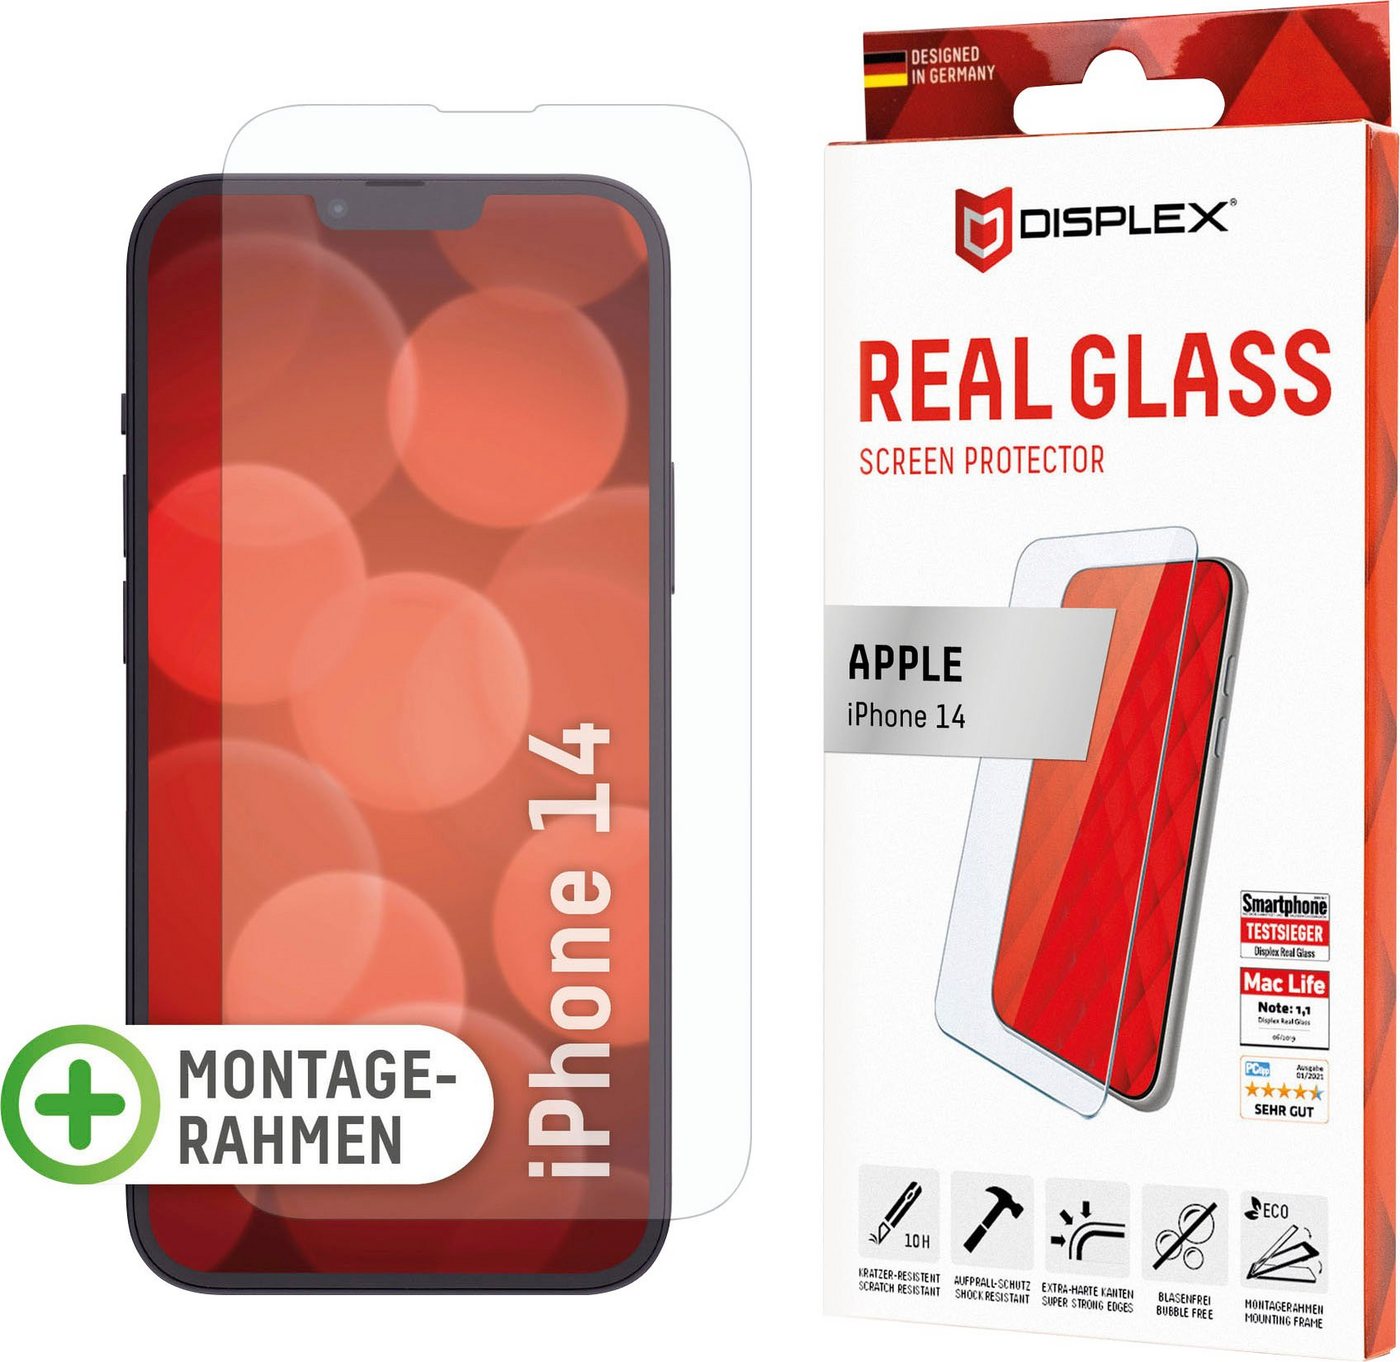 Displex Real Glass - iPhone 14, Displayschutzglas von Displex